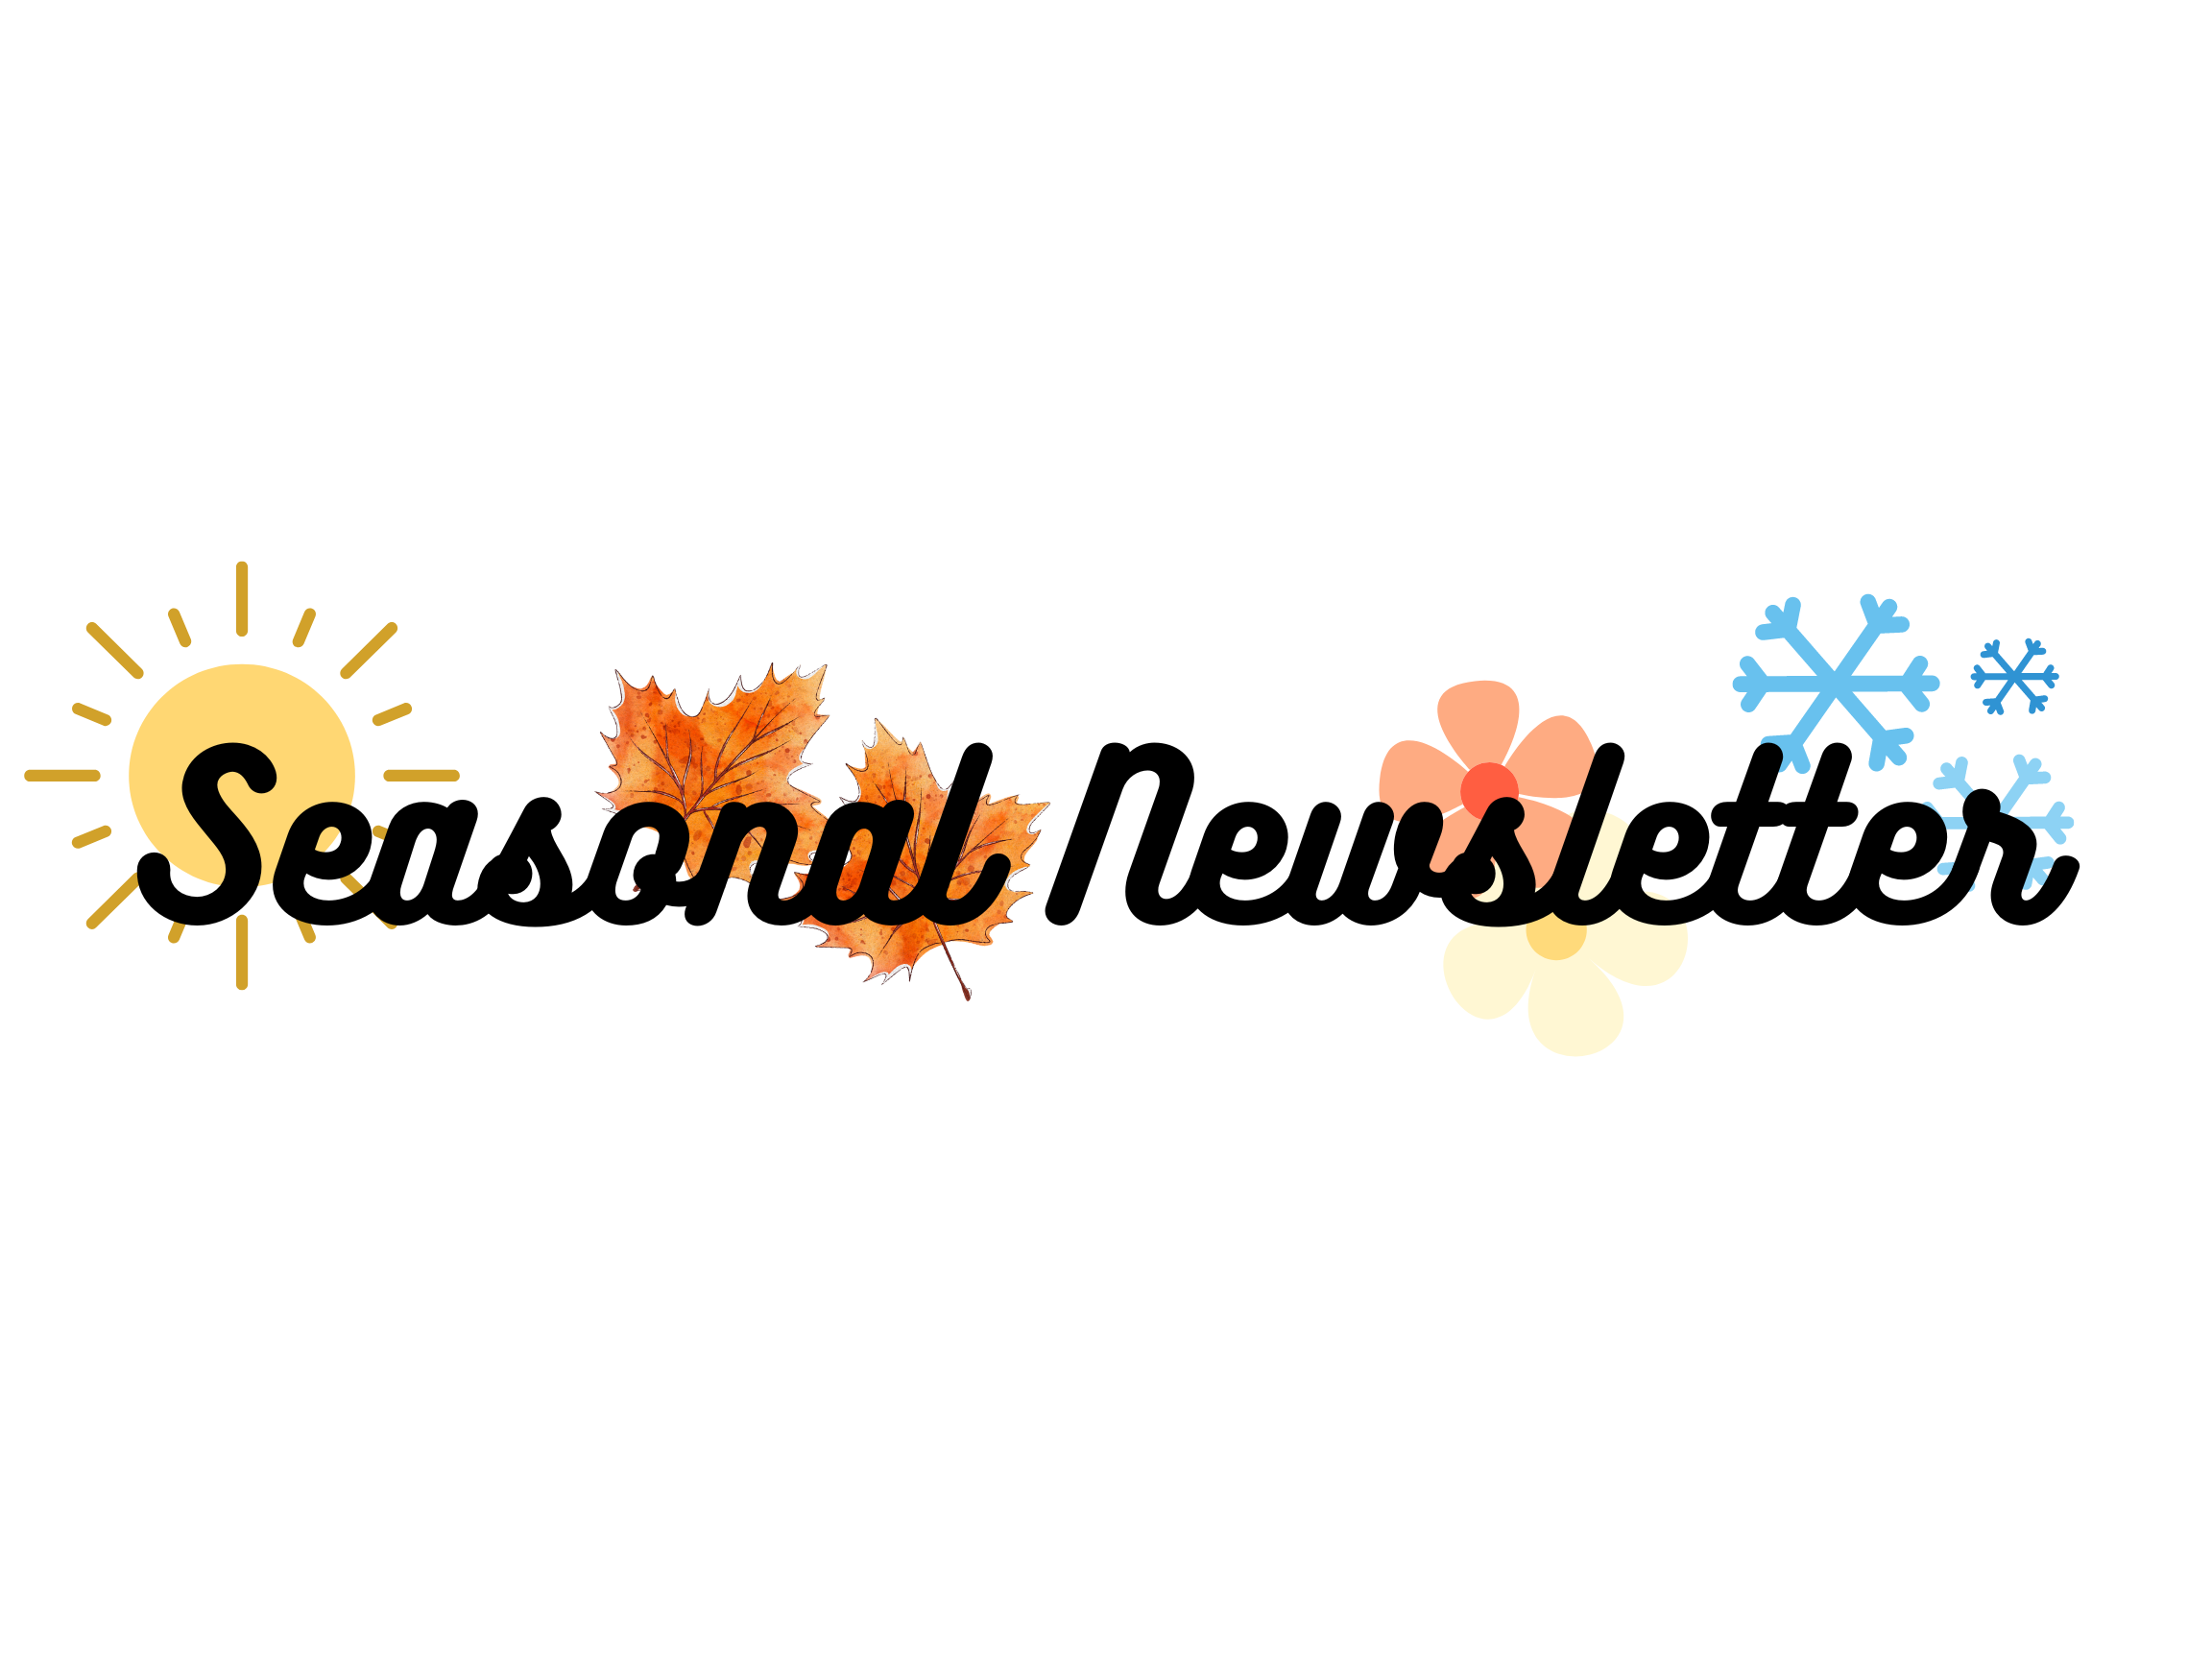 Seasonal Newsletter.png